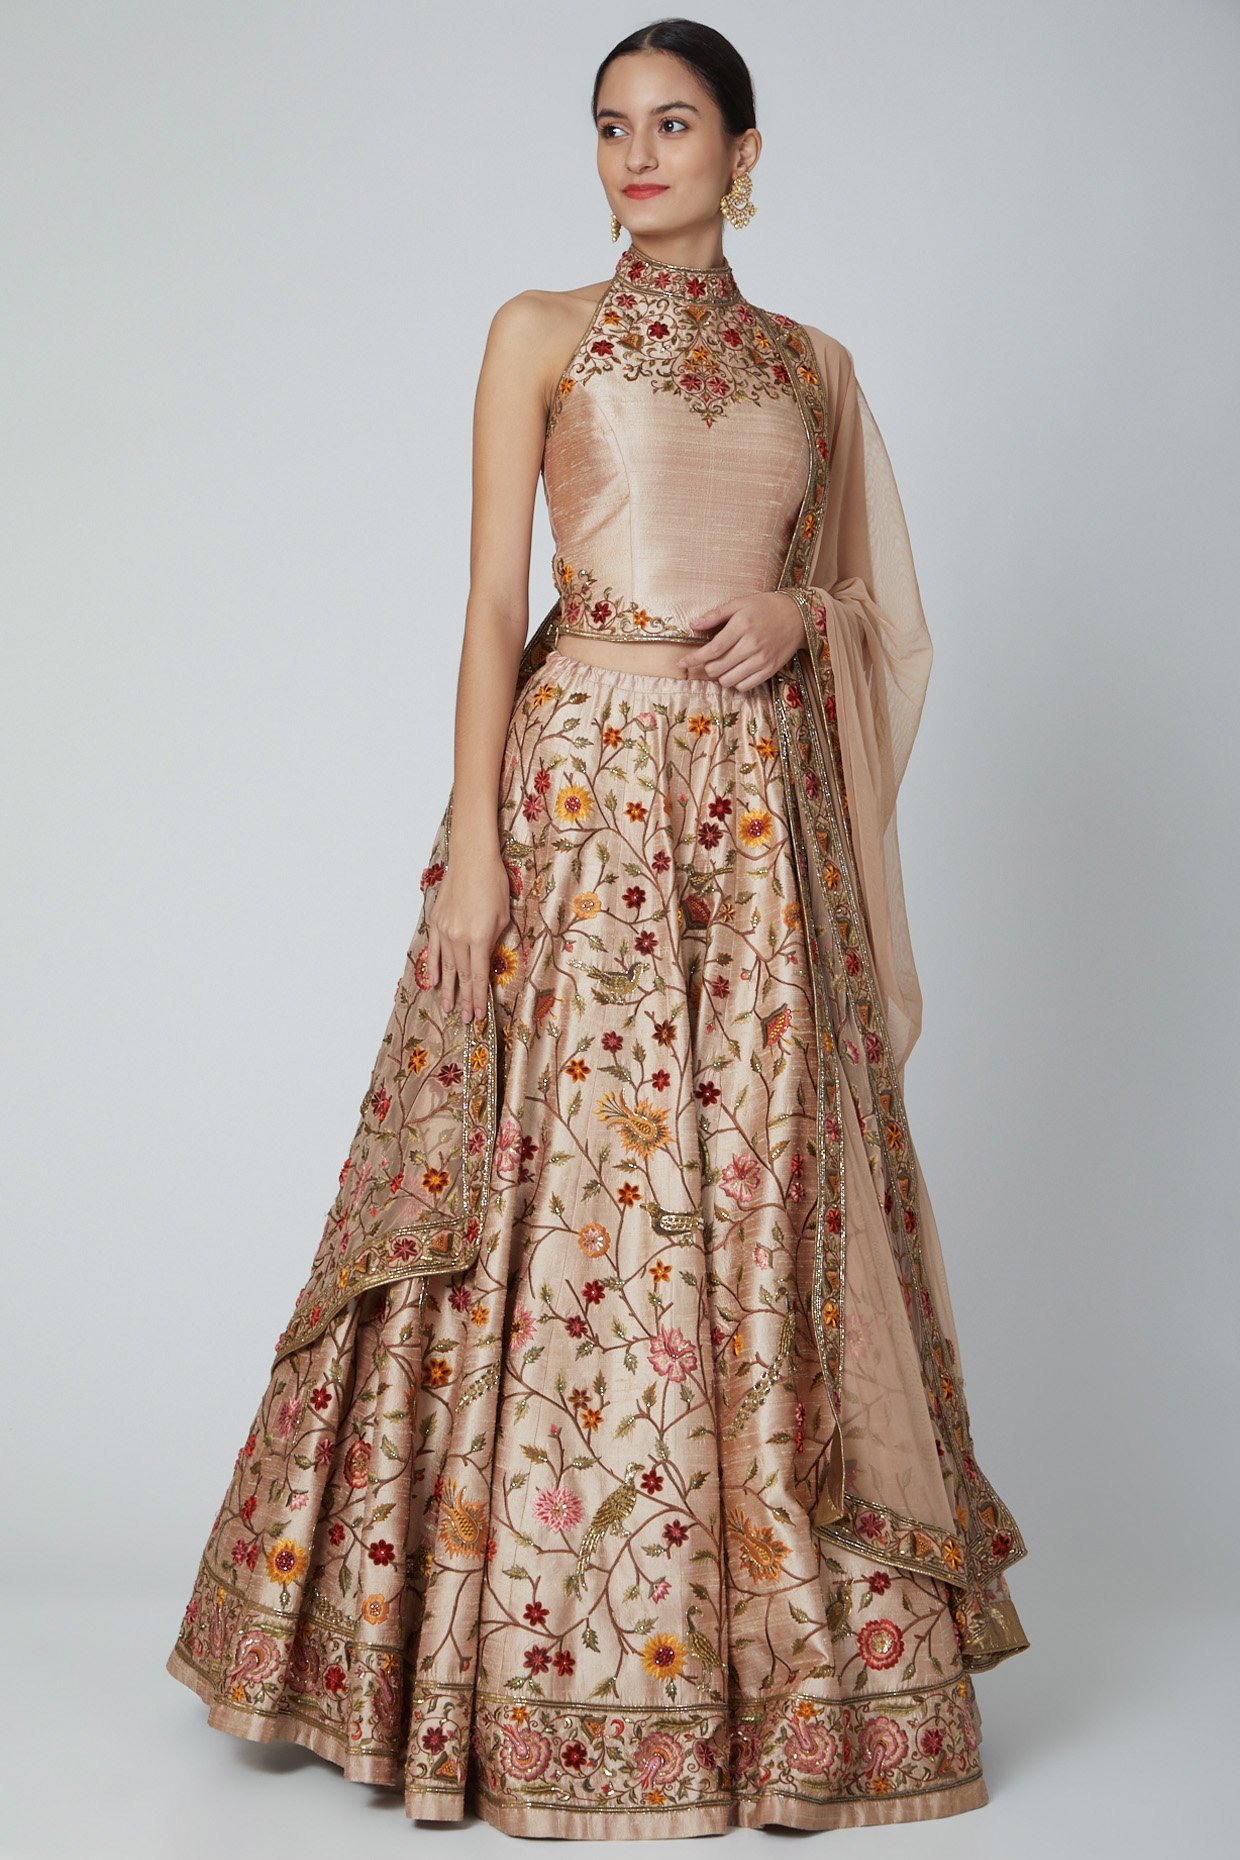 Elegant Bridal Collection by Fashion Designer Rohit Bal